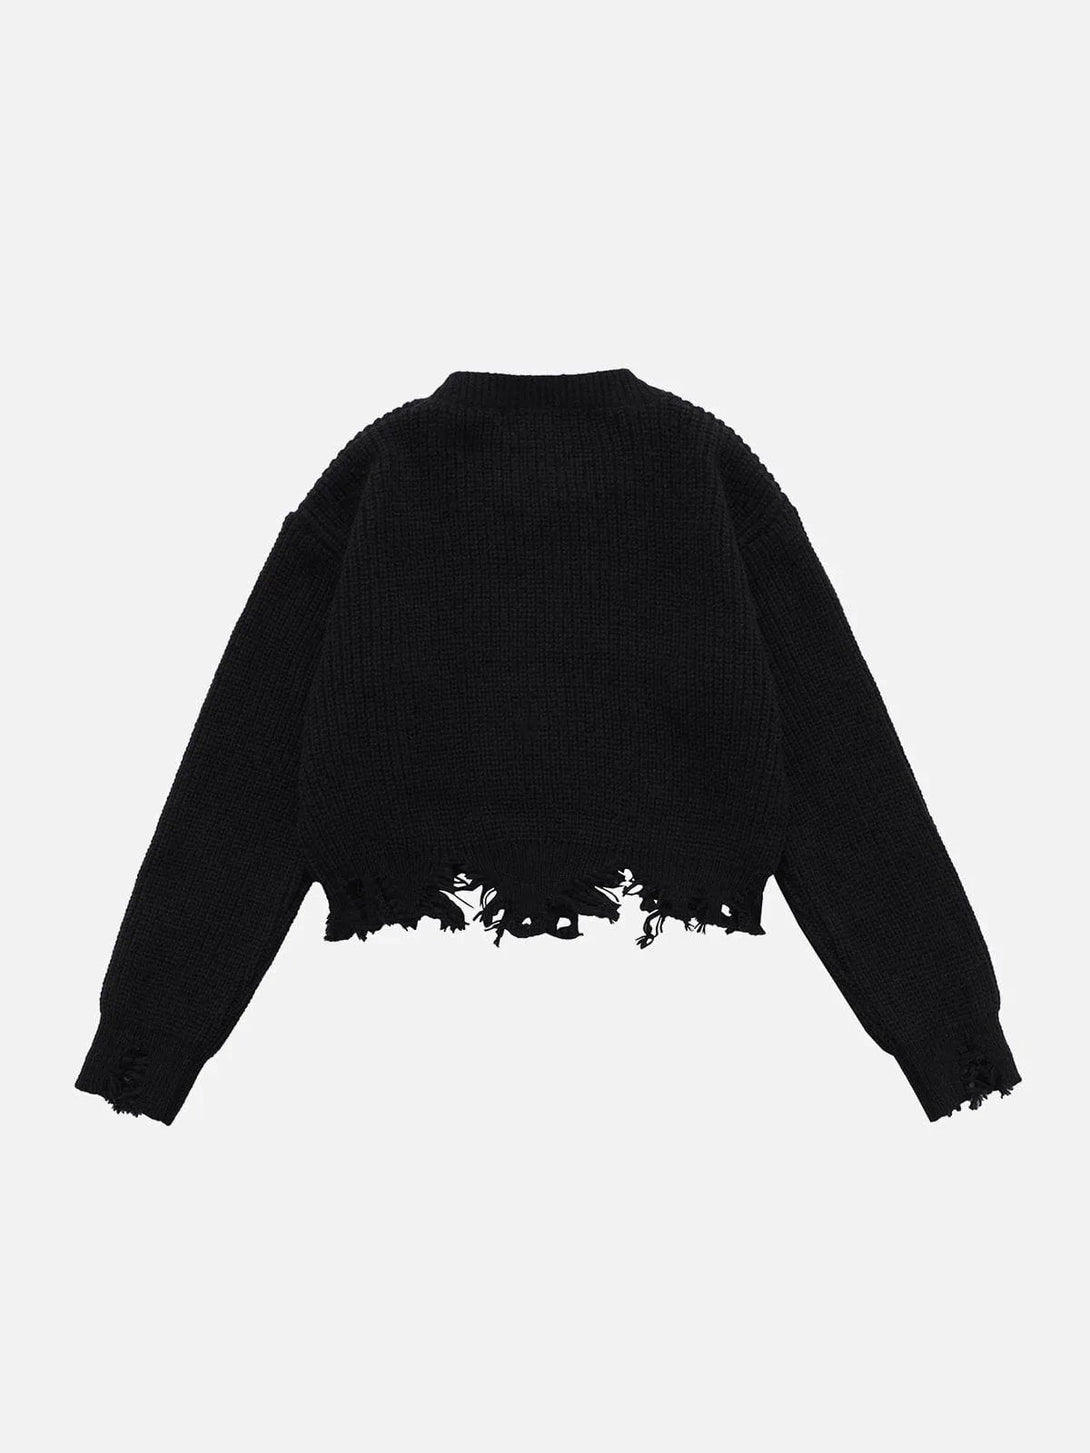 Majesda® - Embroidered Raw Edge Sweater outfit ideas streetwear fashion